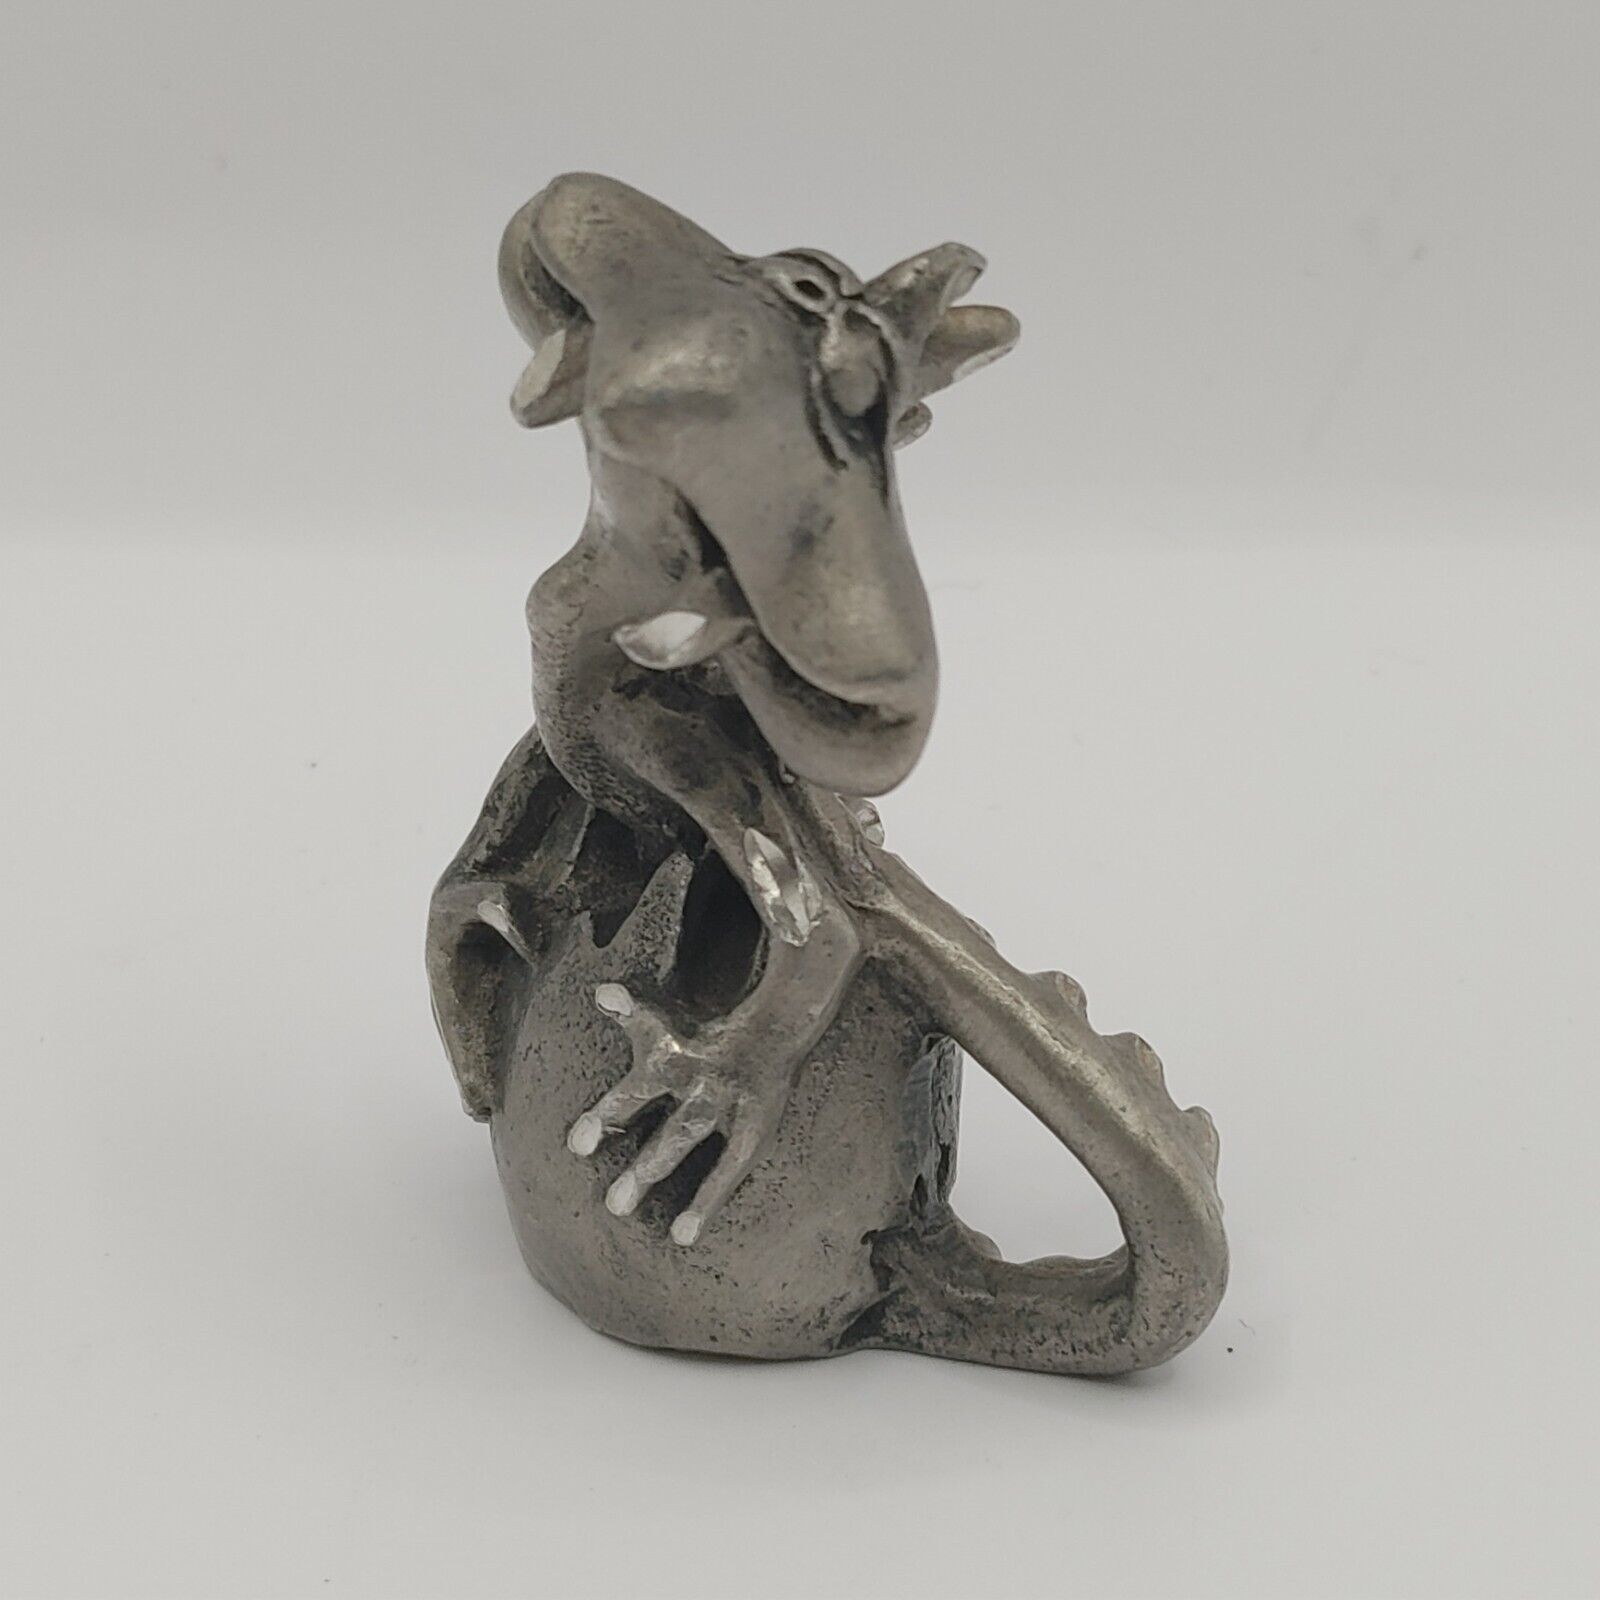 Small Whimsical Fun Metal Pewter Dragon Figurine Sculpture